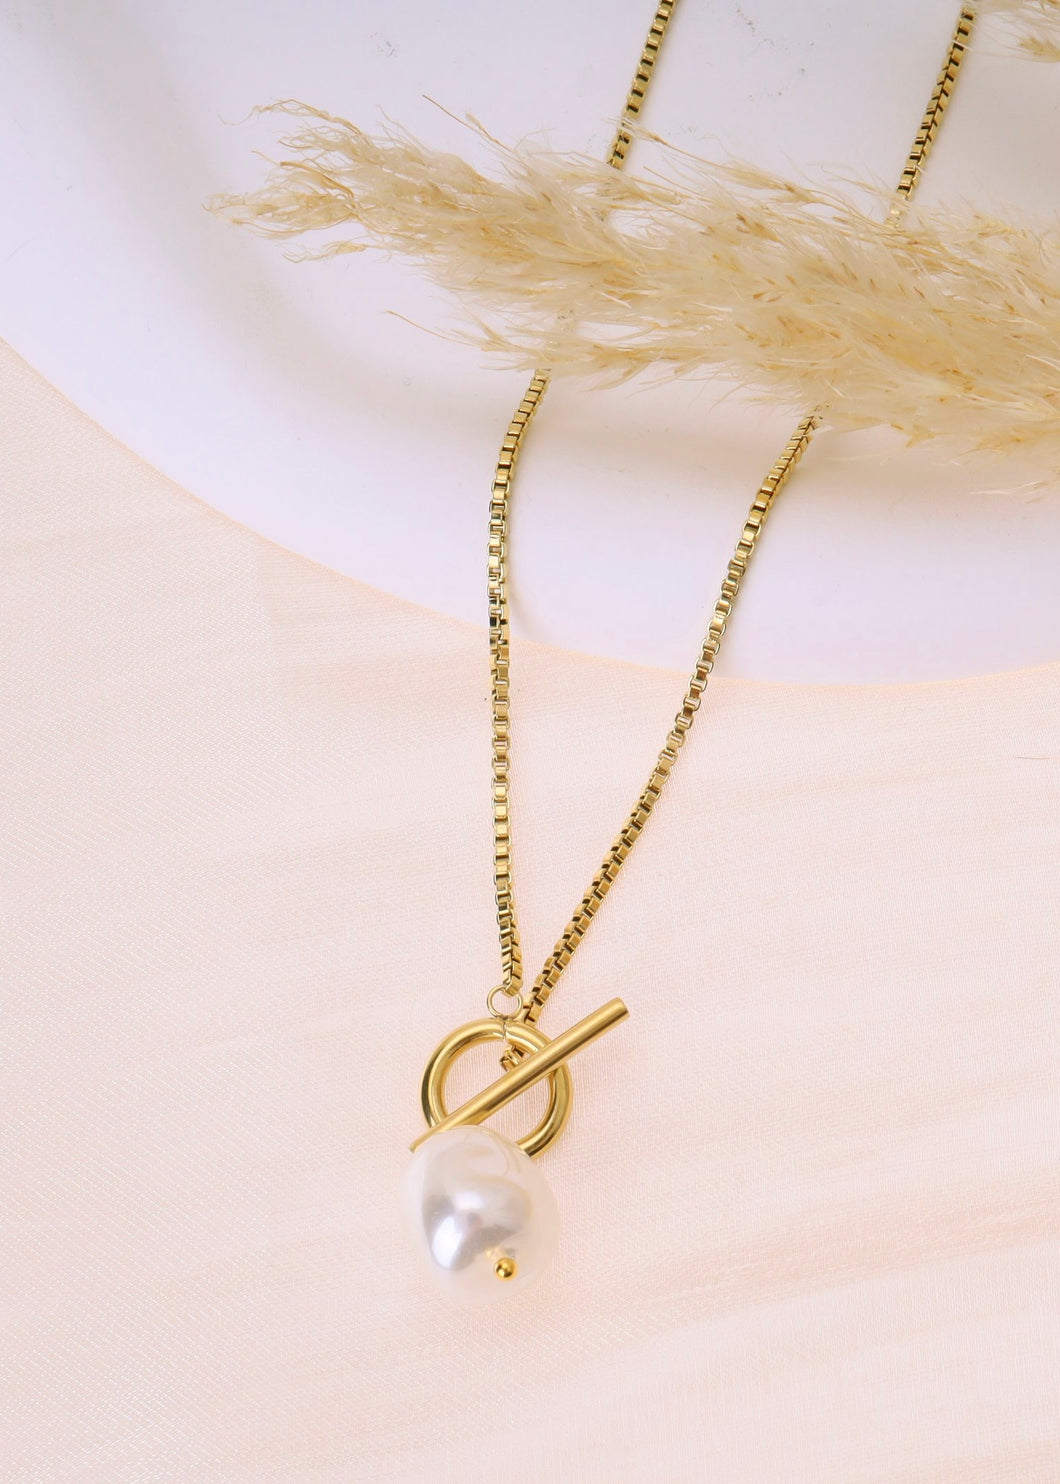 Simple Chain Necklace Kette 